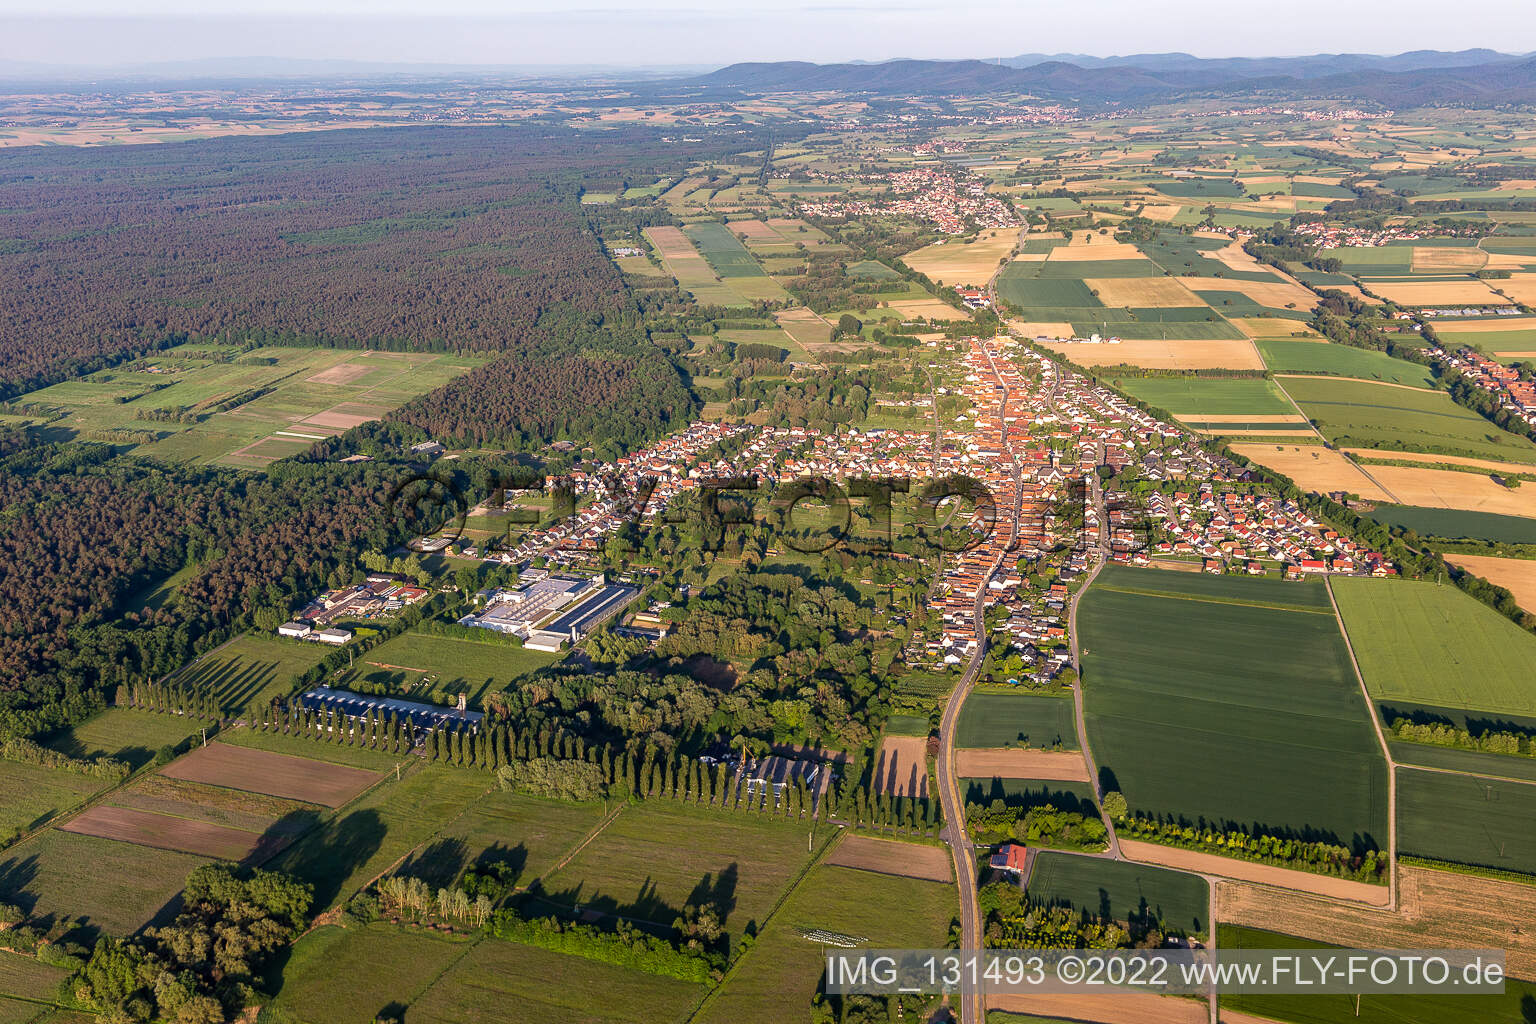 District Schaidt in Wörth am Rhein in the state Rhineland-Palatinate, Germany seen from a drone